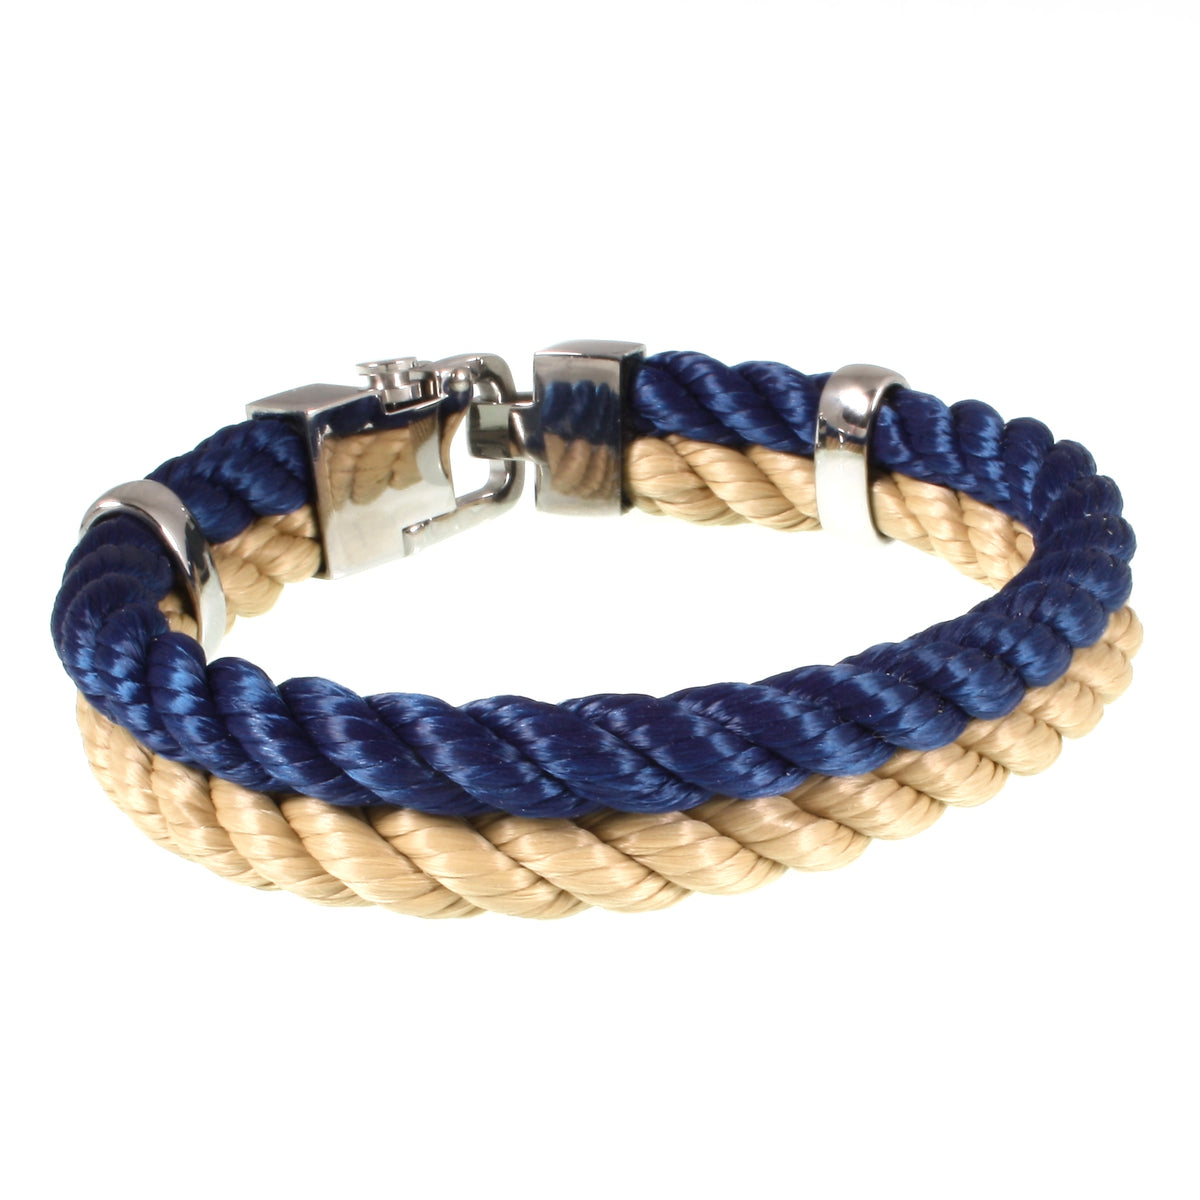 Herren-Segeltau-Armband-Turn-koenigsblau-natur-geflochten-Kordel-Edelstahlverschluss-hinten-wavepirate-shop-k